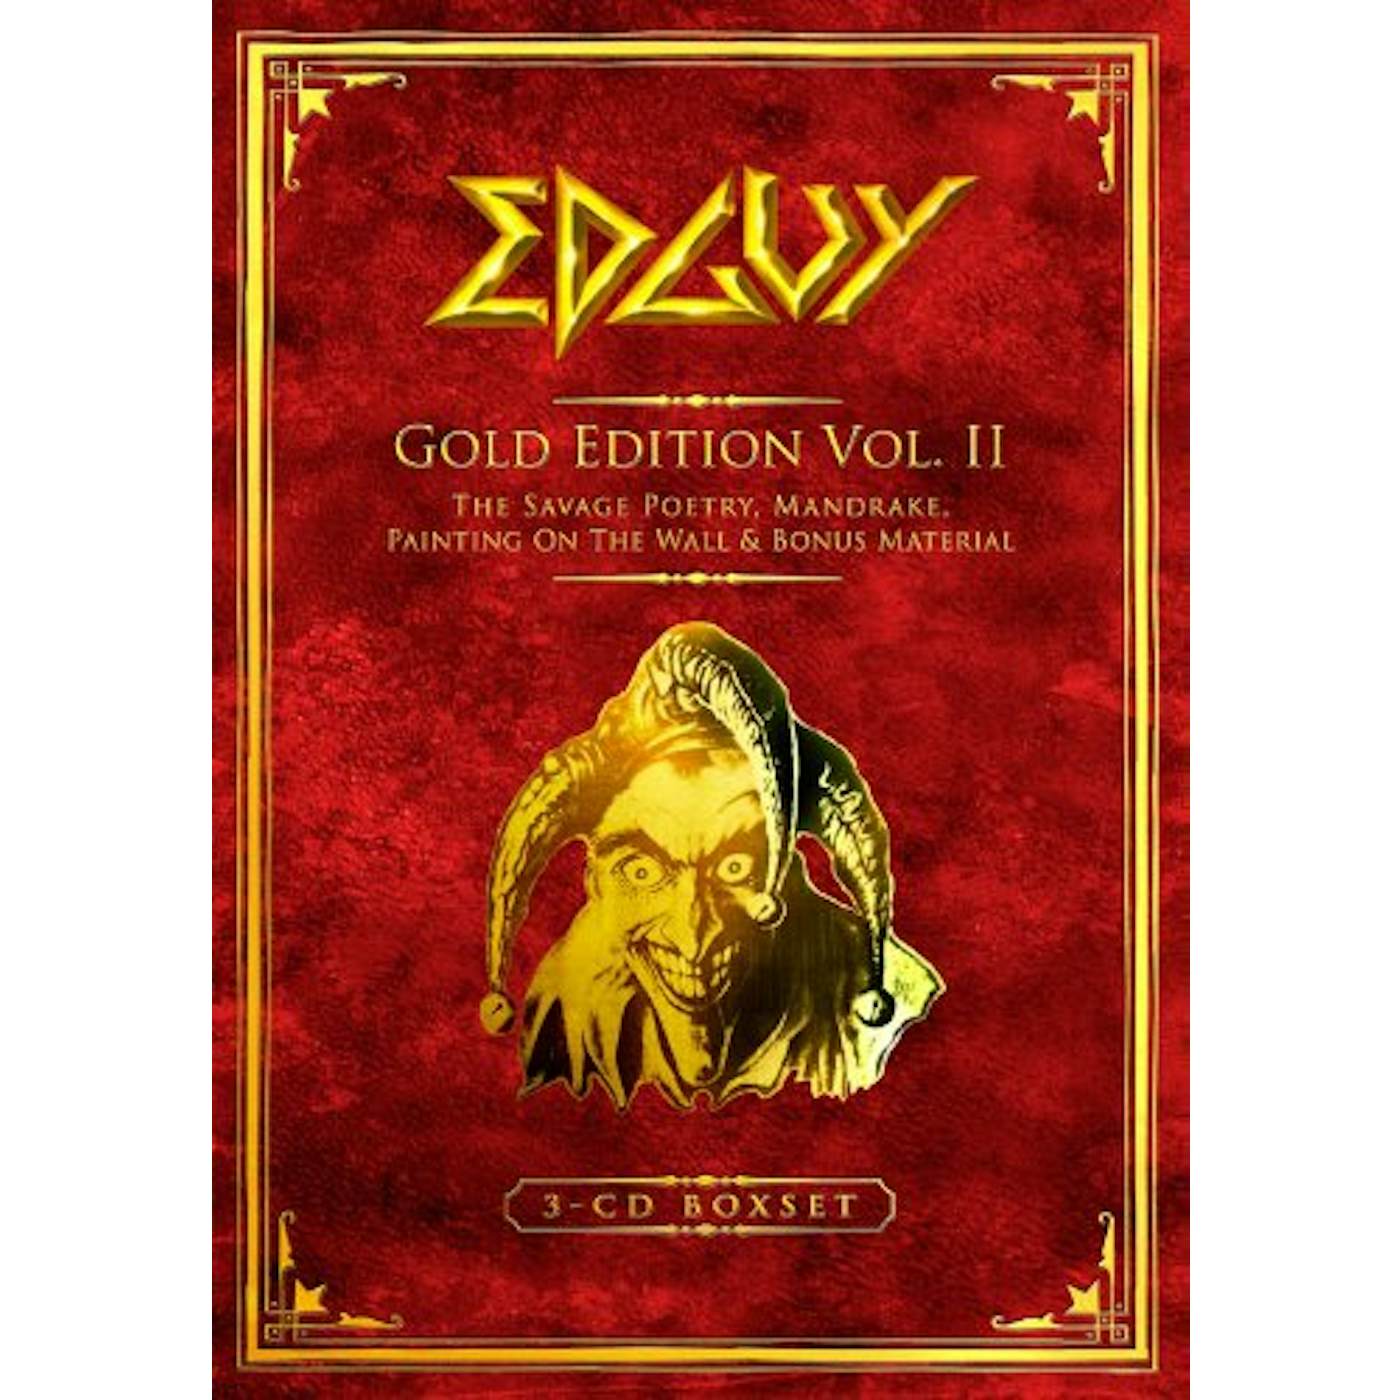 Edguy LEGACY (GOLD EDITION) CD